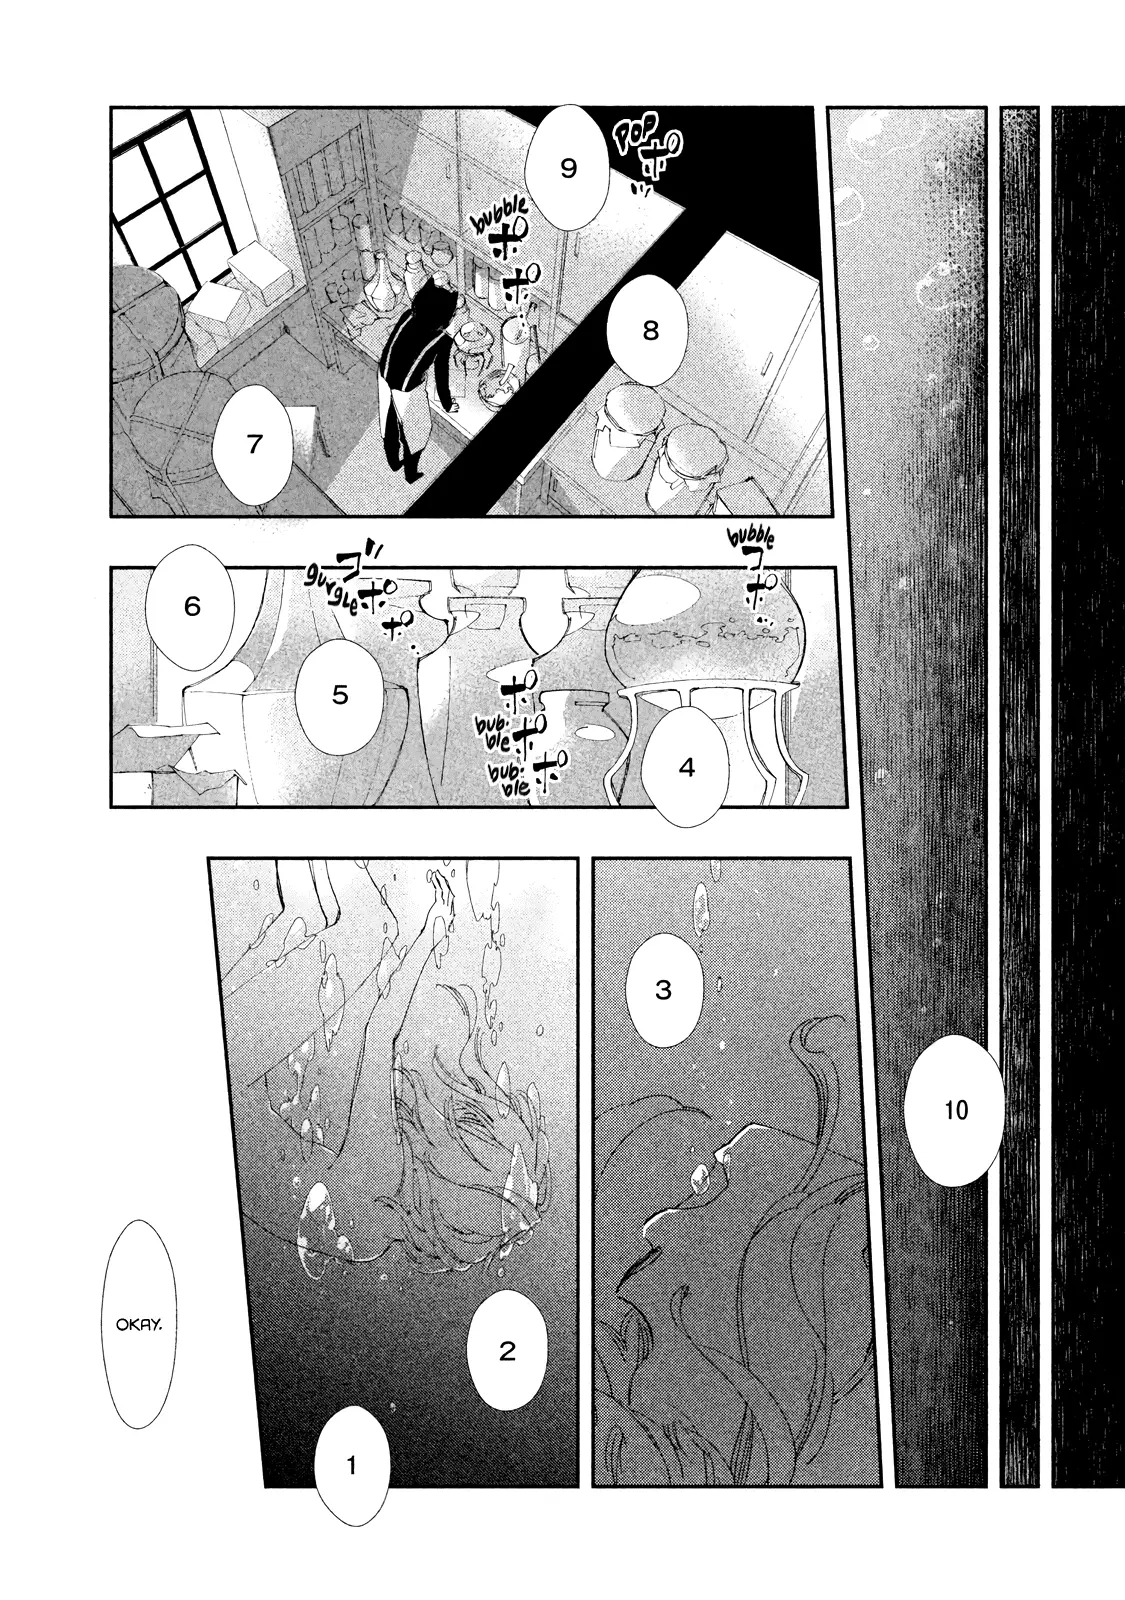 Amegashi - 8 page 4-58ce0c80